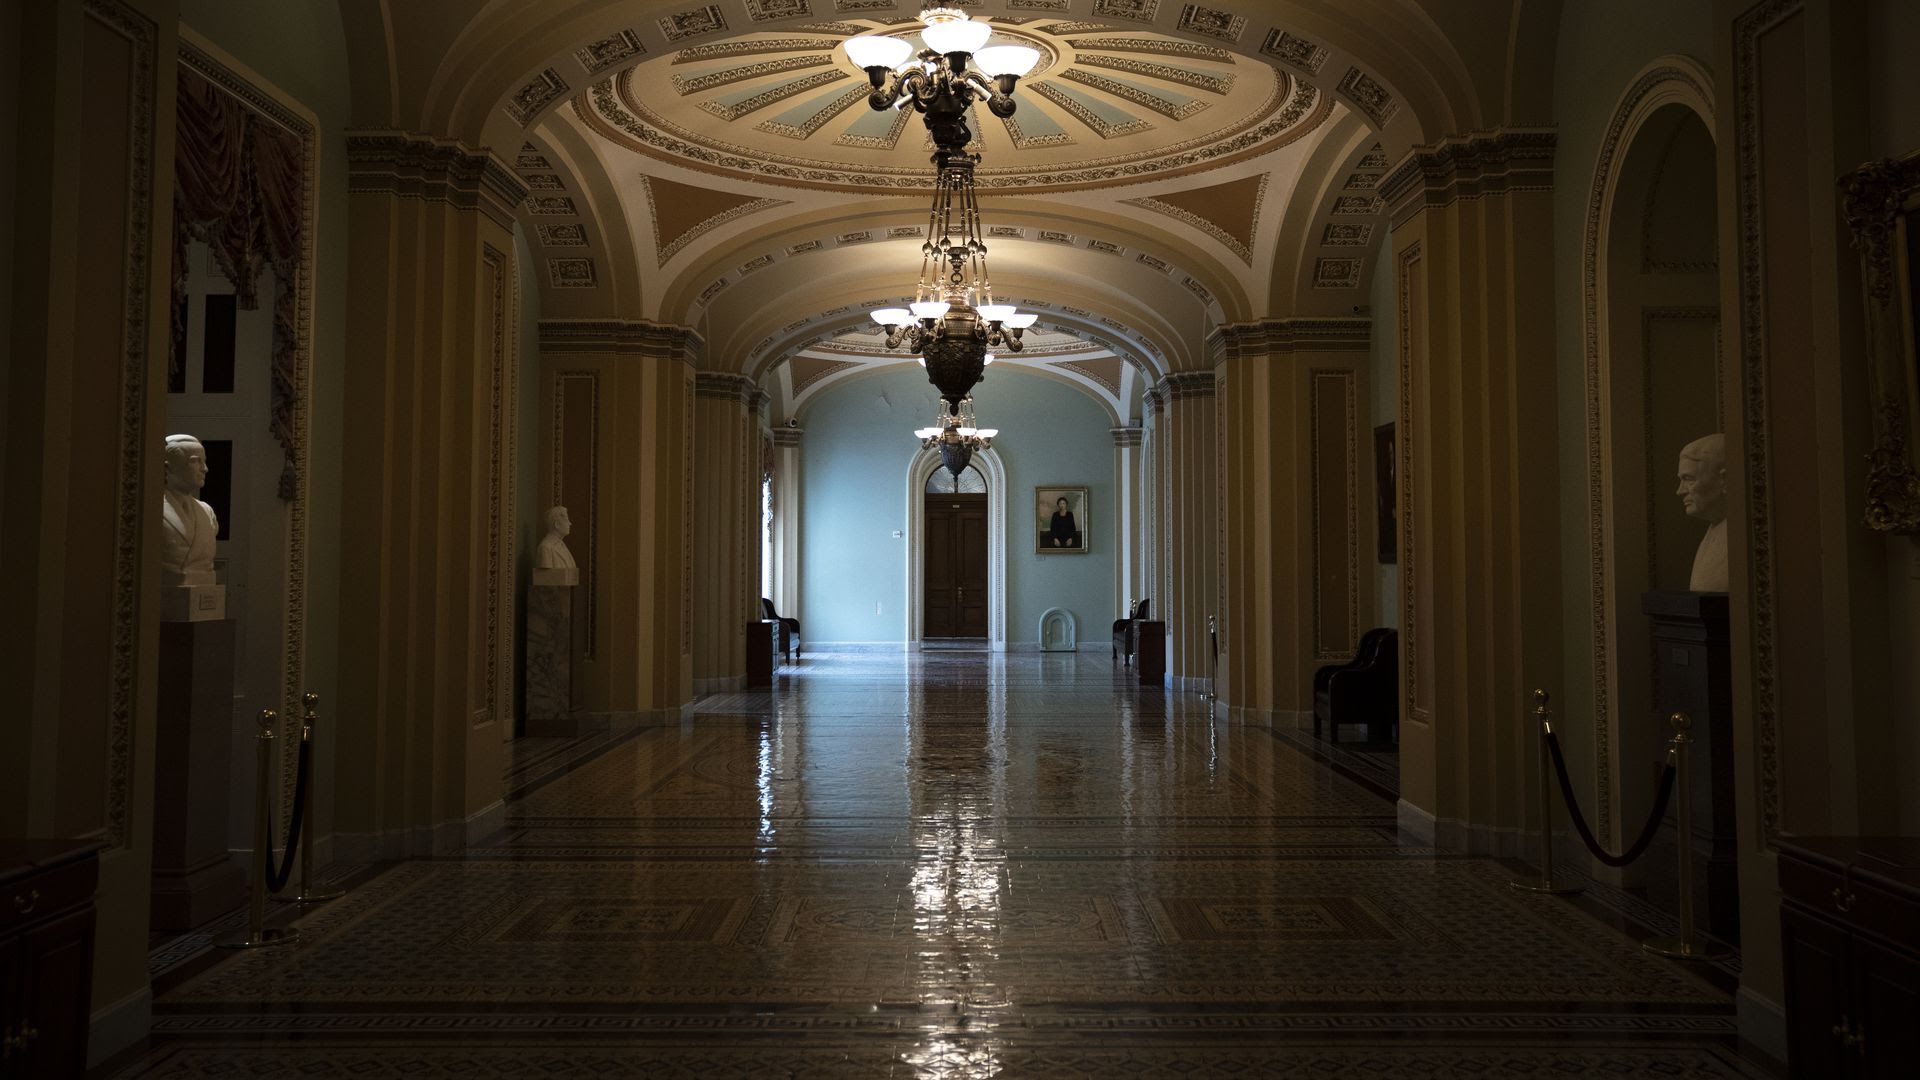 The Congressional hallway.